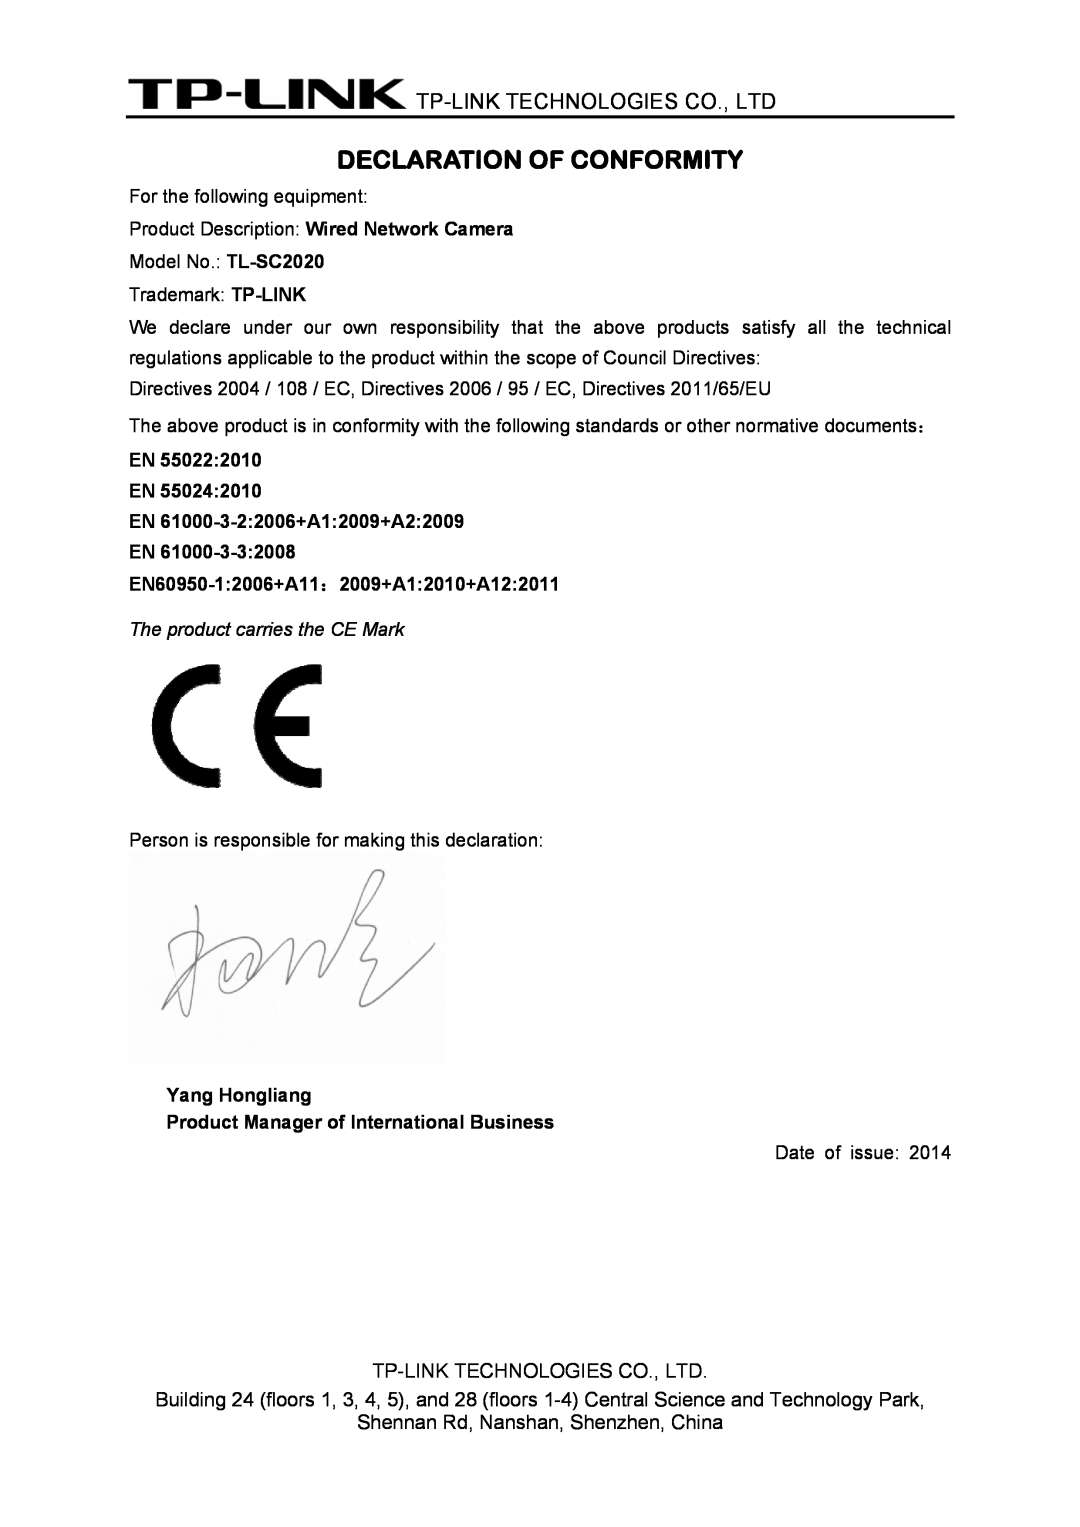 TP-Link TL-SC2020 manual Declaration Of Conformity, Shennan Rd, Nanshan, Shenzhen, China 